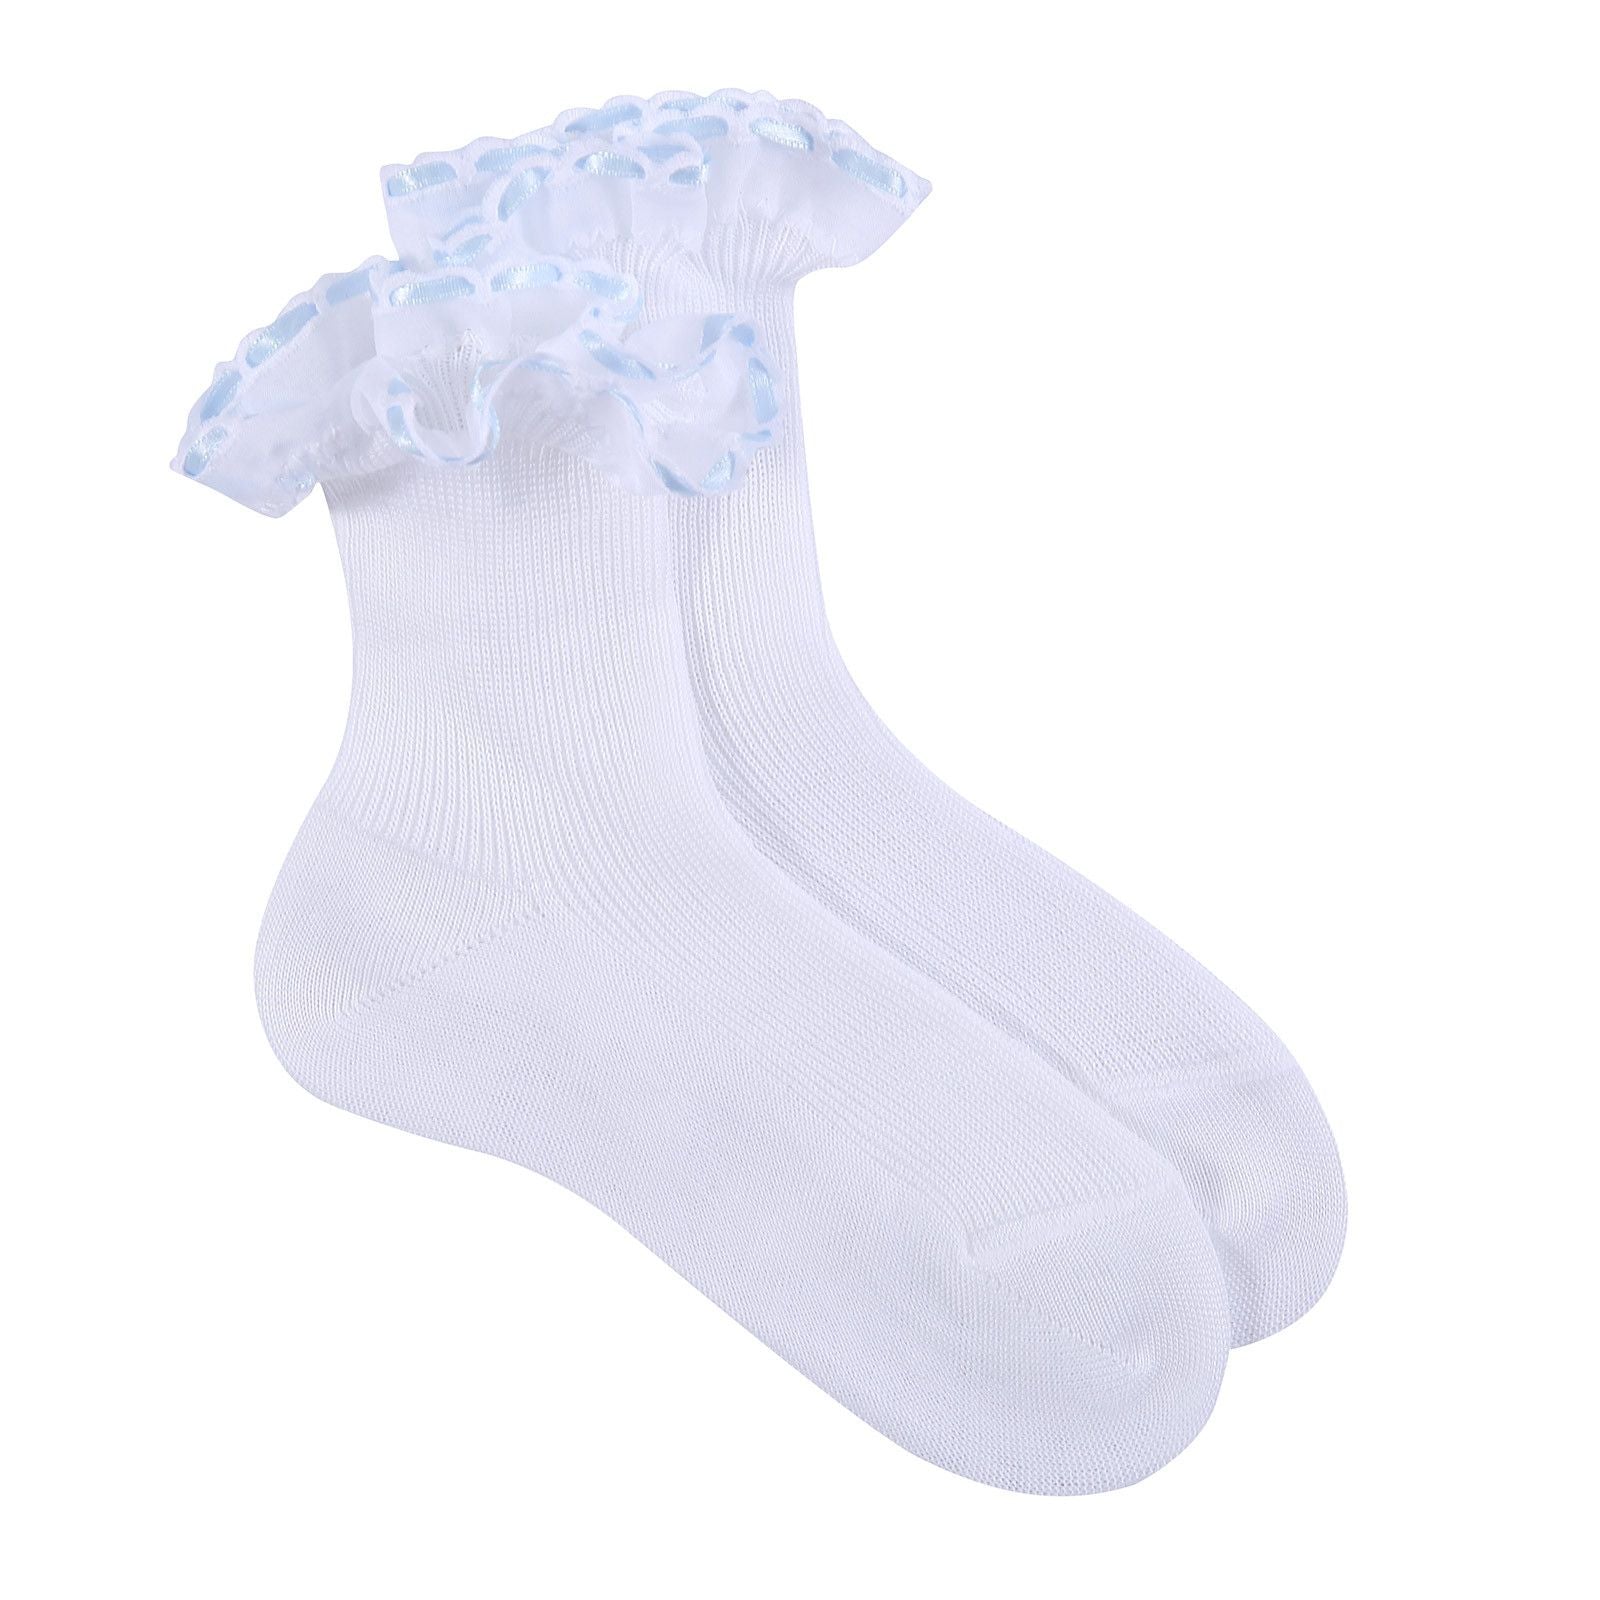 Girls White Cotton Short Socks With Light Blue Strap Ankle - CÉMAROSE | Children's Fashion Store